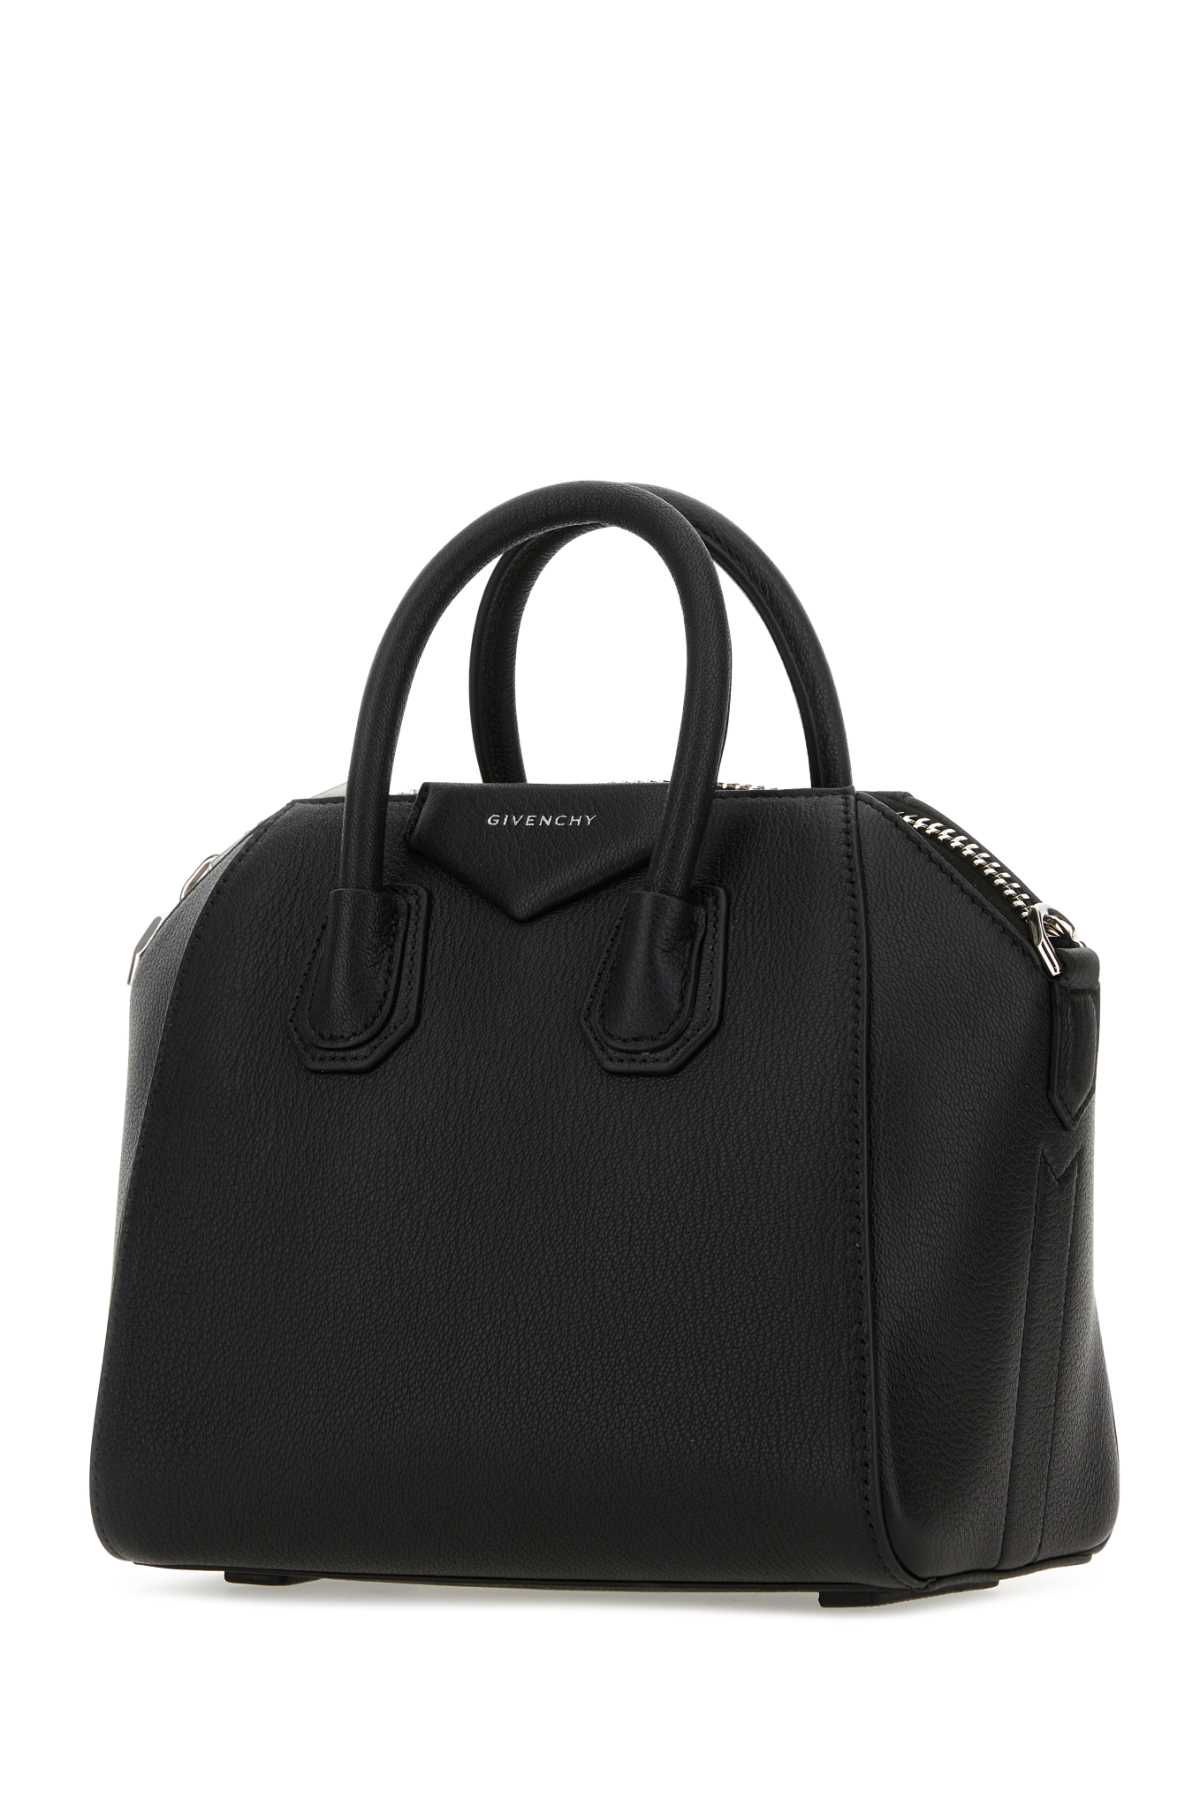 Givenchy Black Leather Mini Antigona Handbag